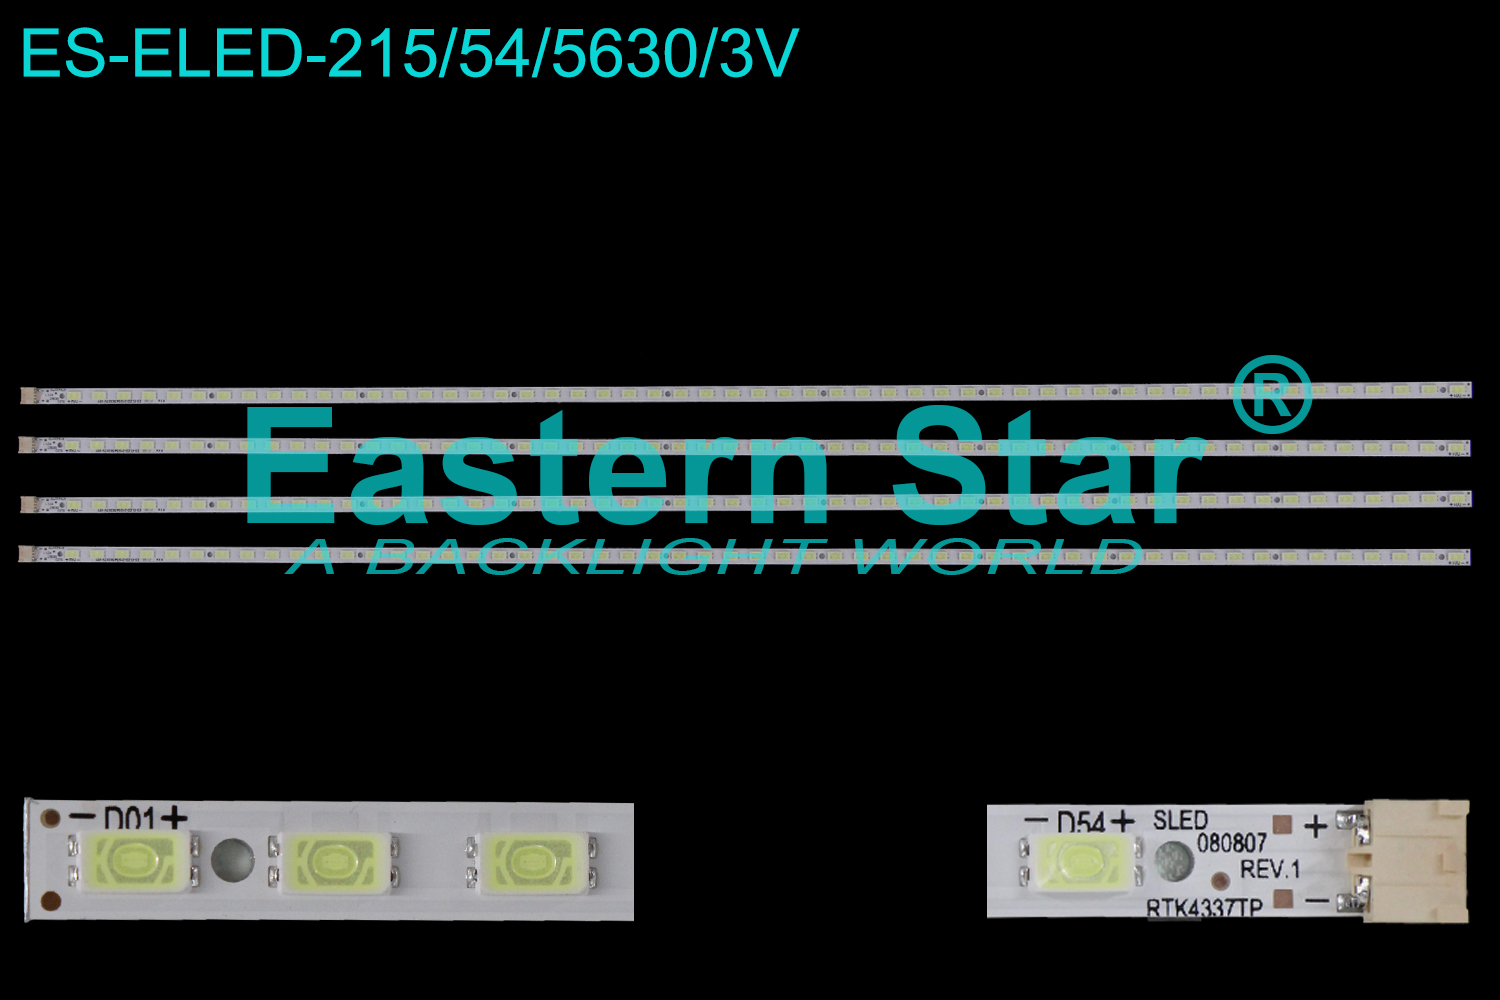 ES-ELED-215 ELED/EDGE TV backlight 46'' 54LEDs use for Sony SLED 080807 Rev.1 AE 4660B RUNTK4337TP LED STRIPS(4)